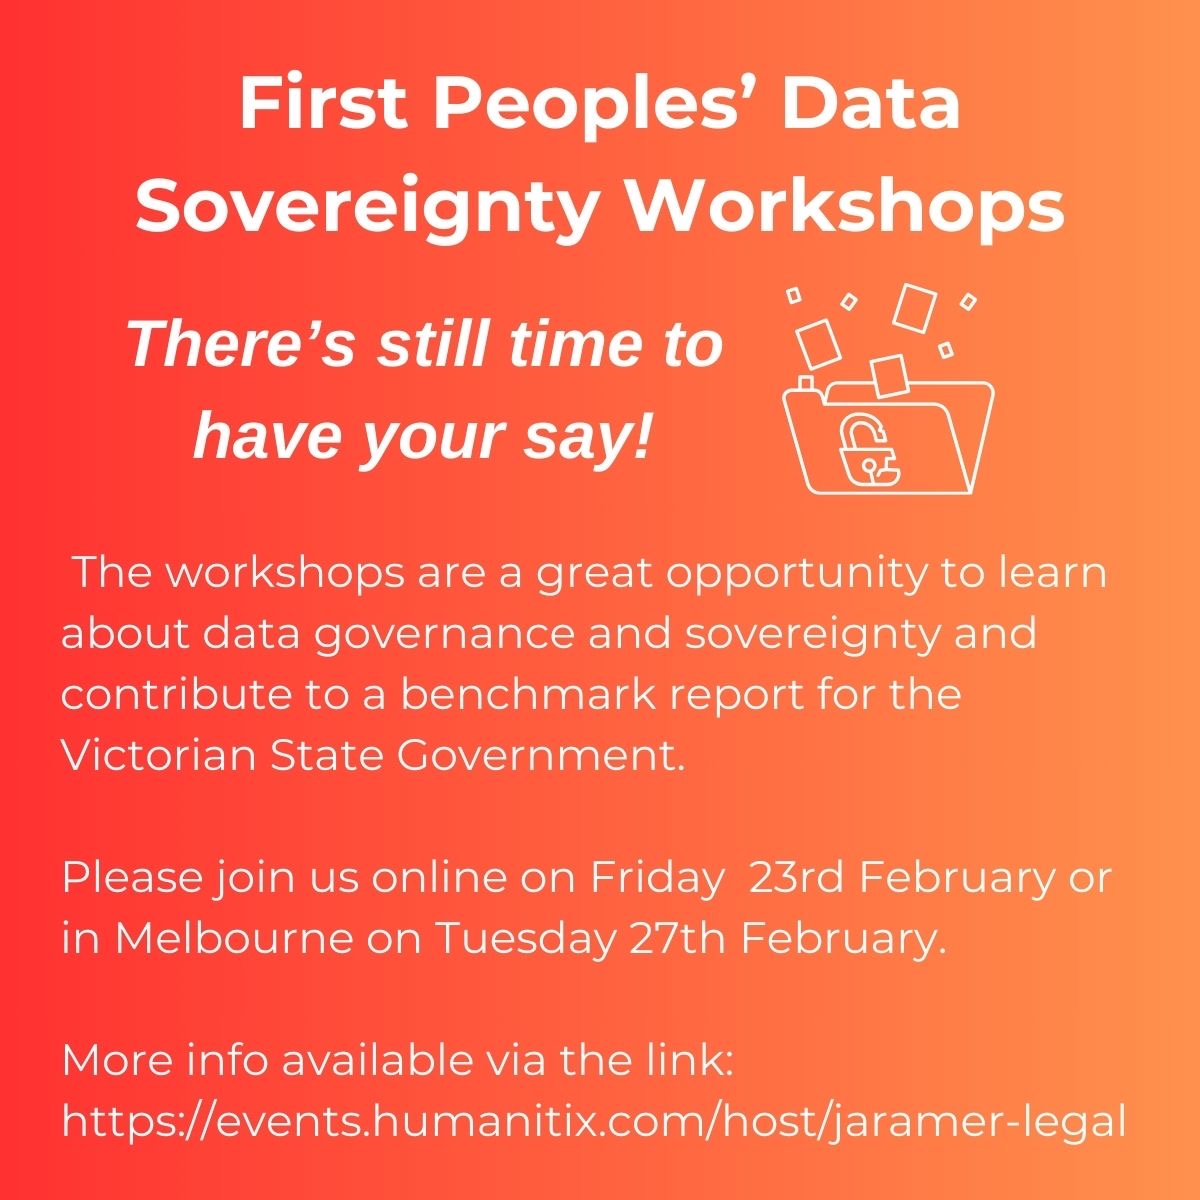 Join us: @JaramerLegal & Indigenous Data Network at @unimelb are hosting workshops to help @VicGov_DJSIR develop a First Peoples’ data sovereignty framework.